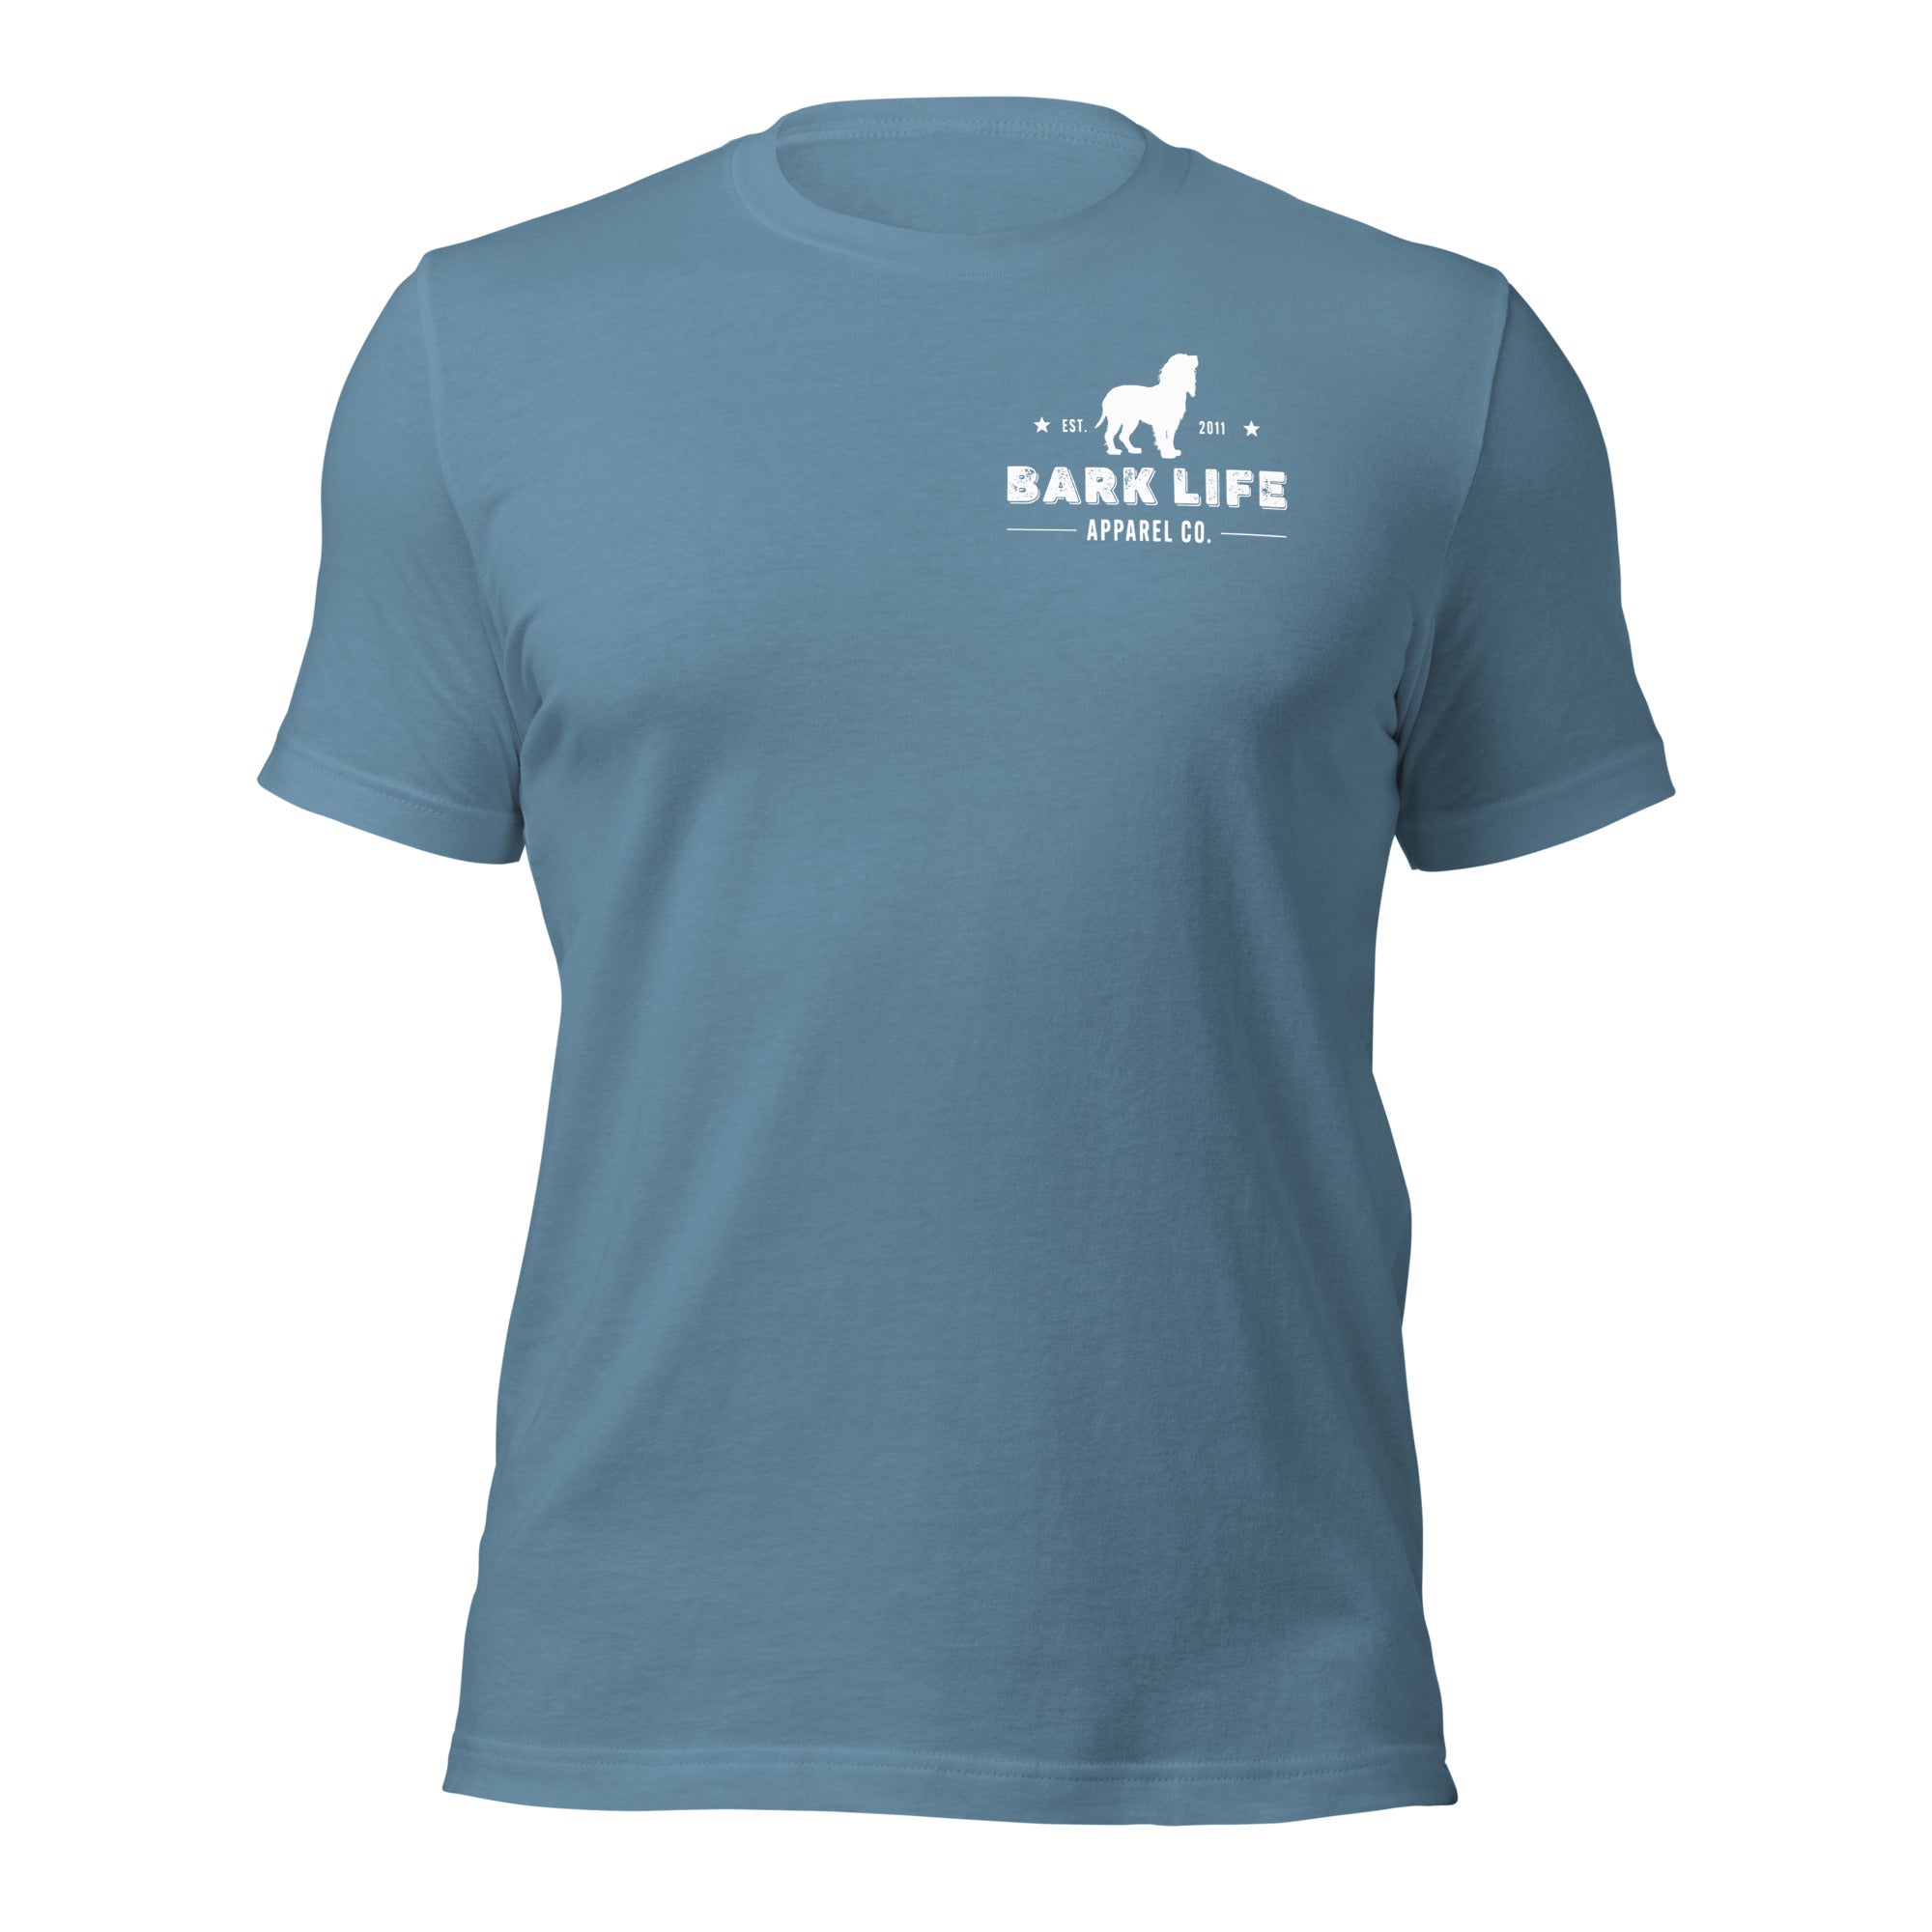 Boykin Spaniel - Short Sleeve Cotton Tee  Shirt